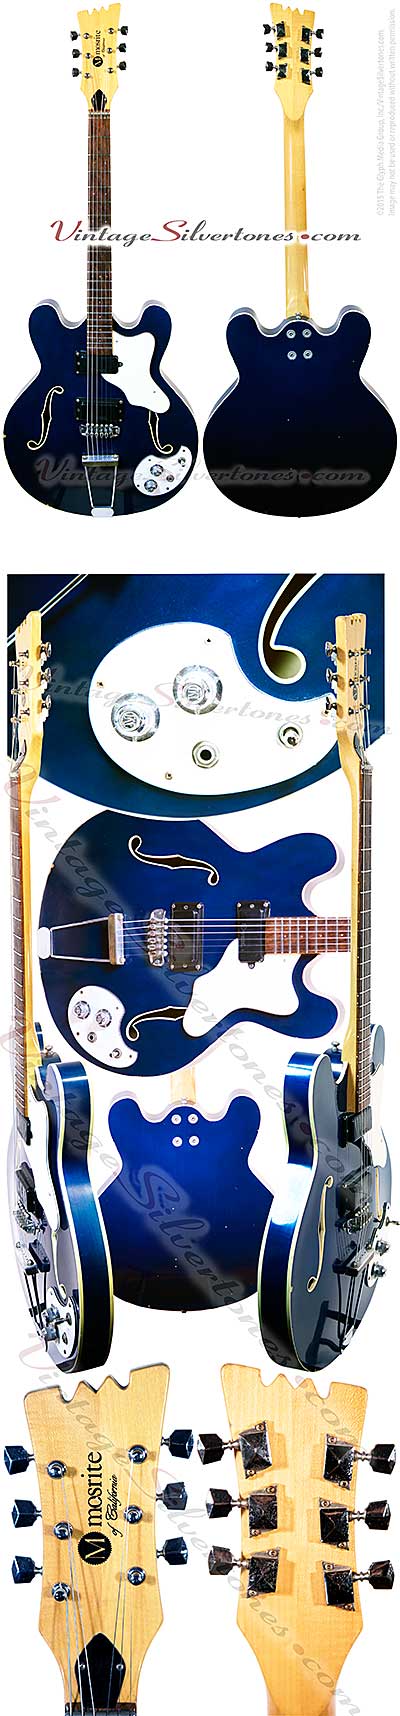 Mosrite celebrity III, blue, 2pu, double cutaway, hollow body, Mosrite tailpiece, 1968, California